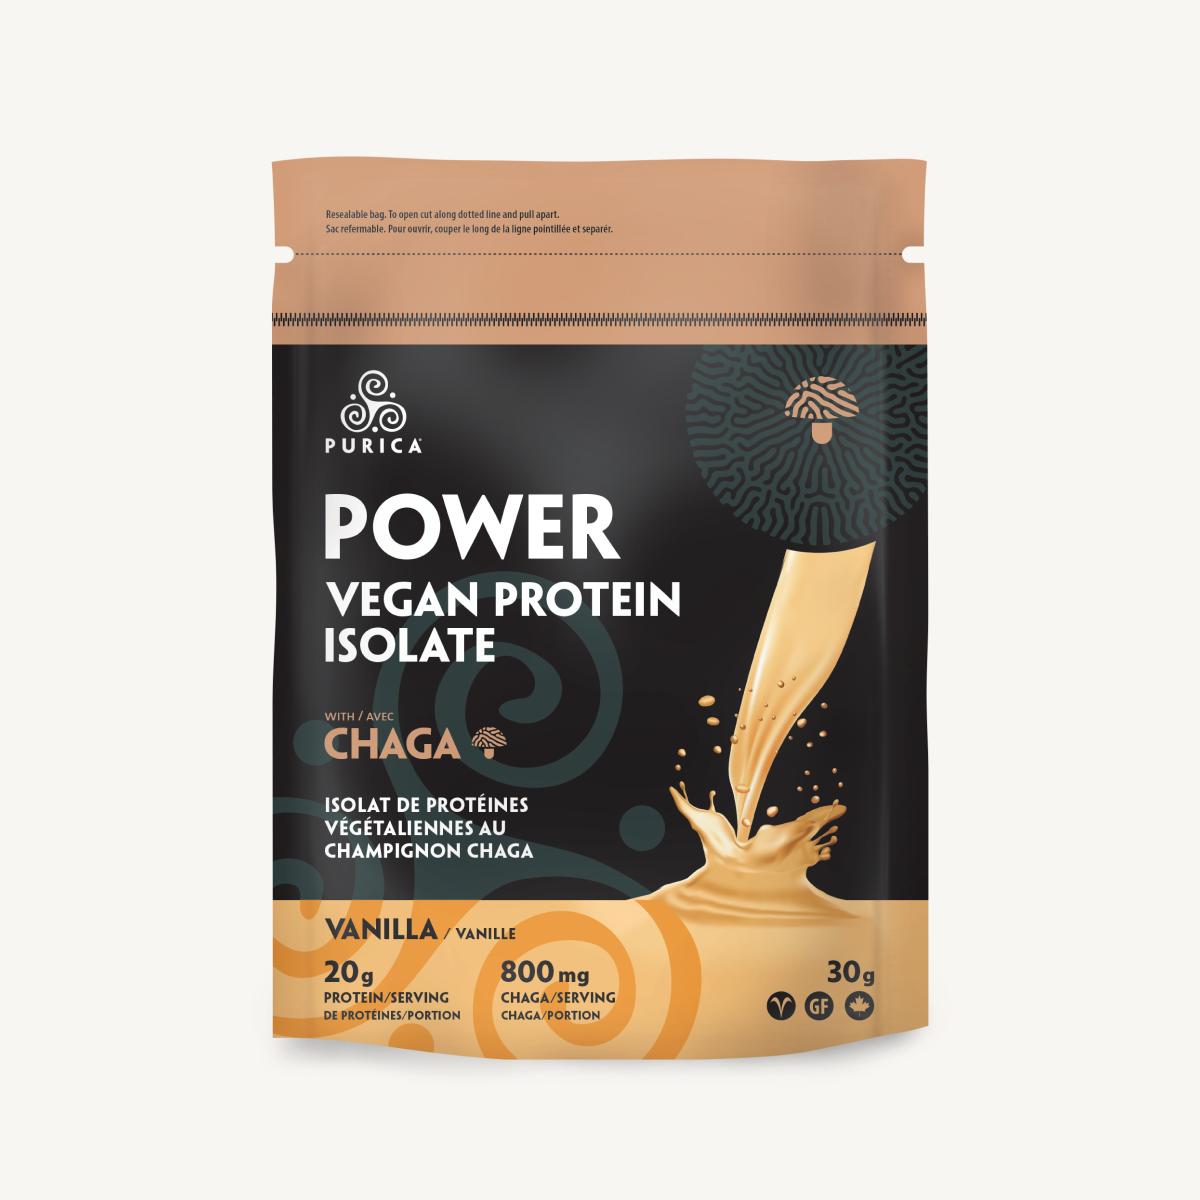 Vegan Protein with Chaga